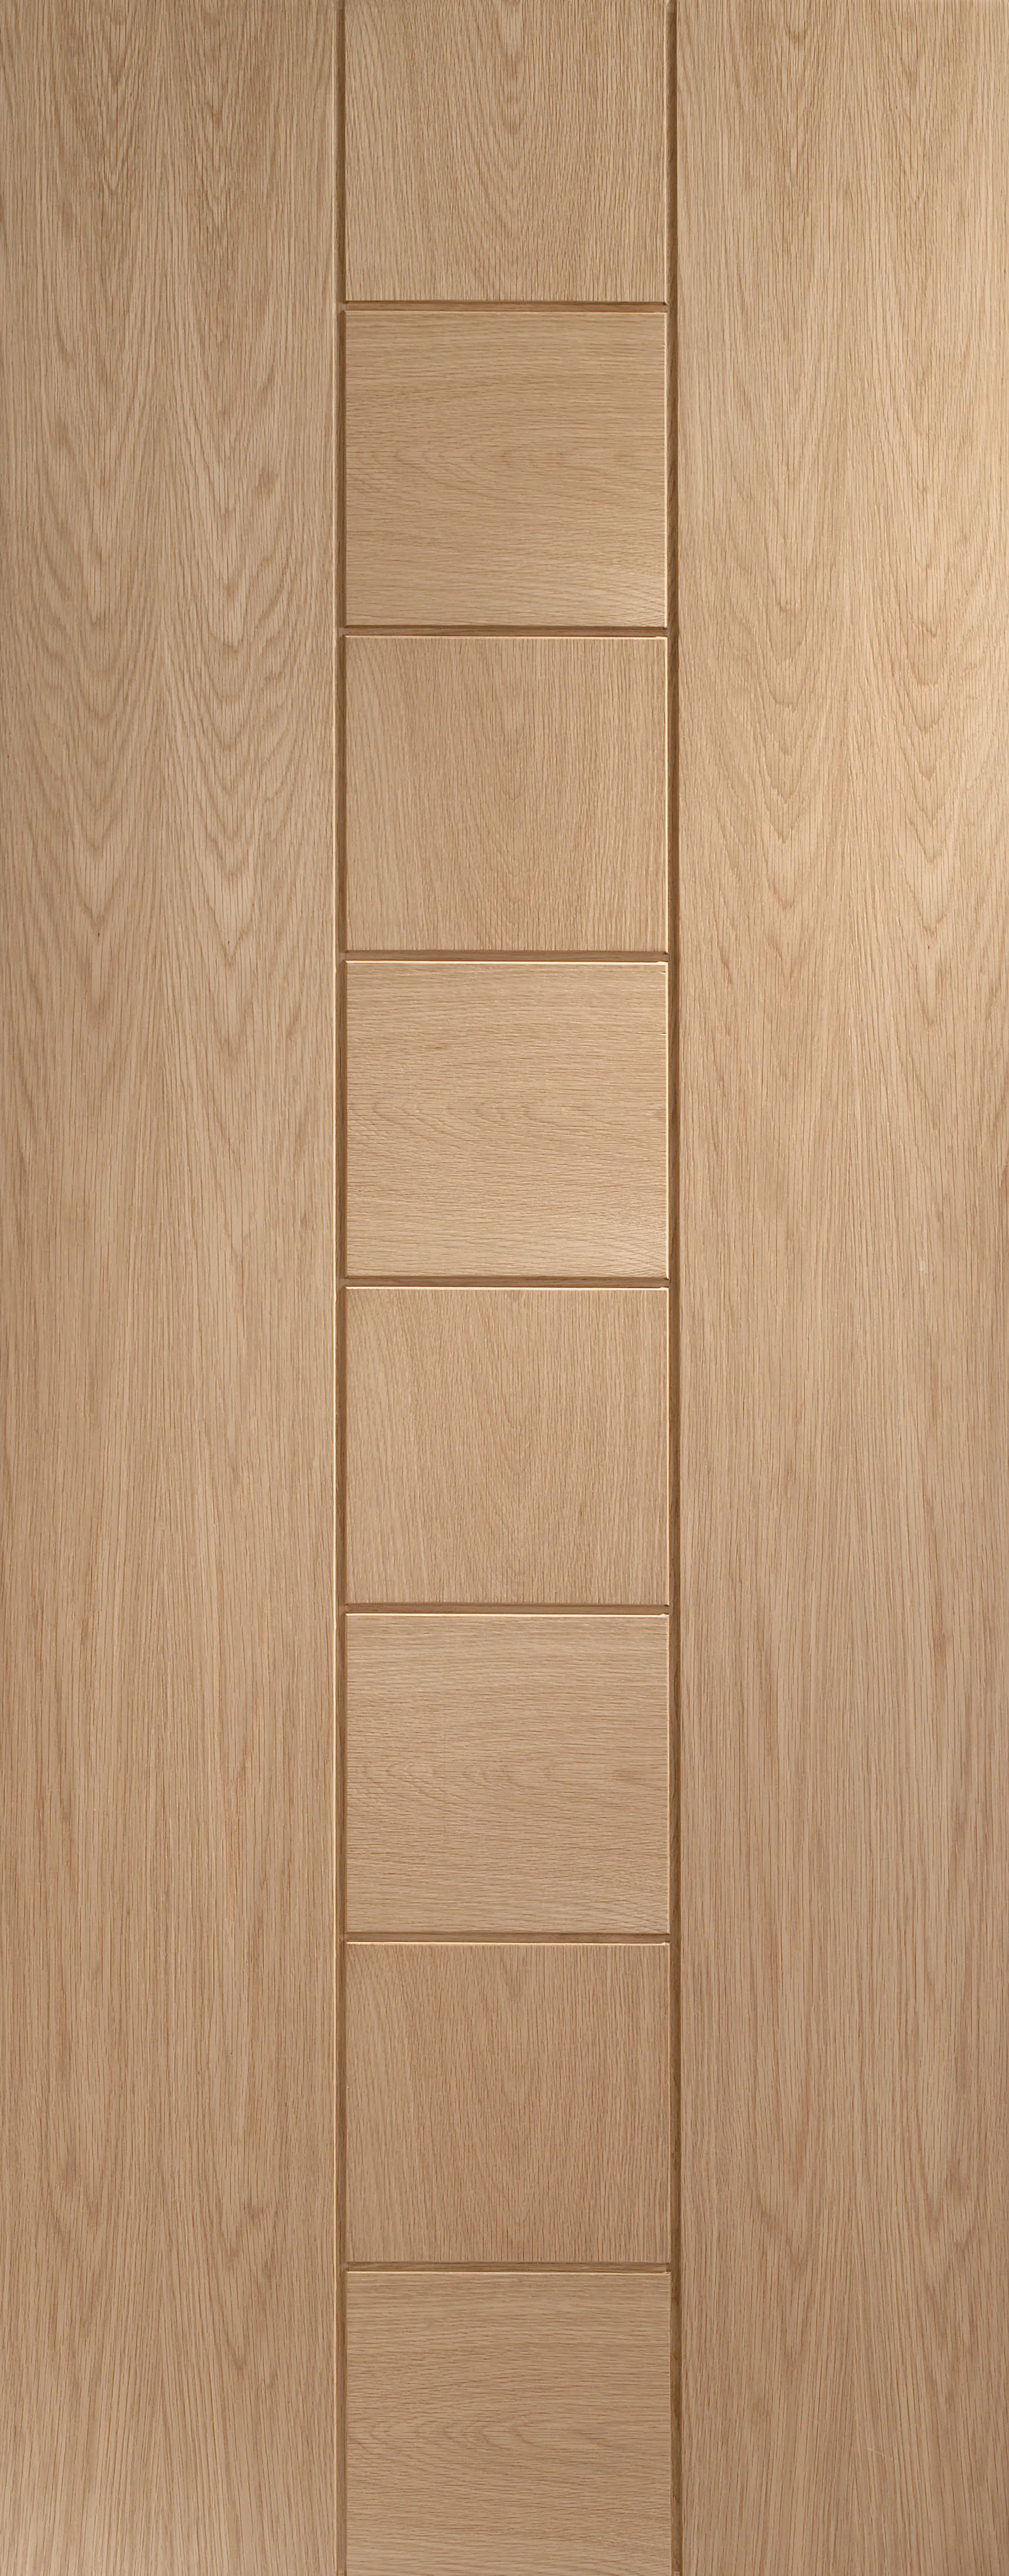 XL Joinery Messina Oak 8 Panel Un-finished Internal Door - 1981mm